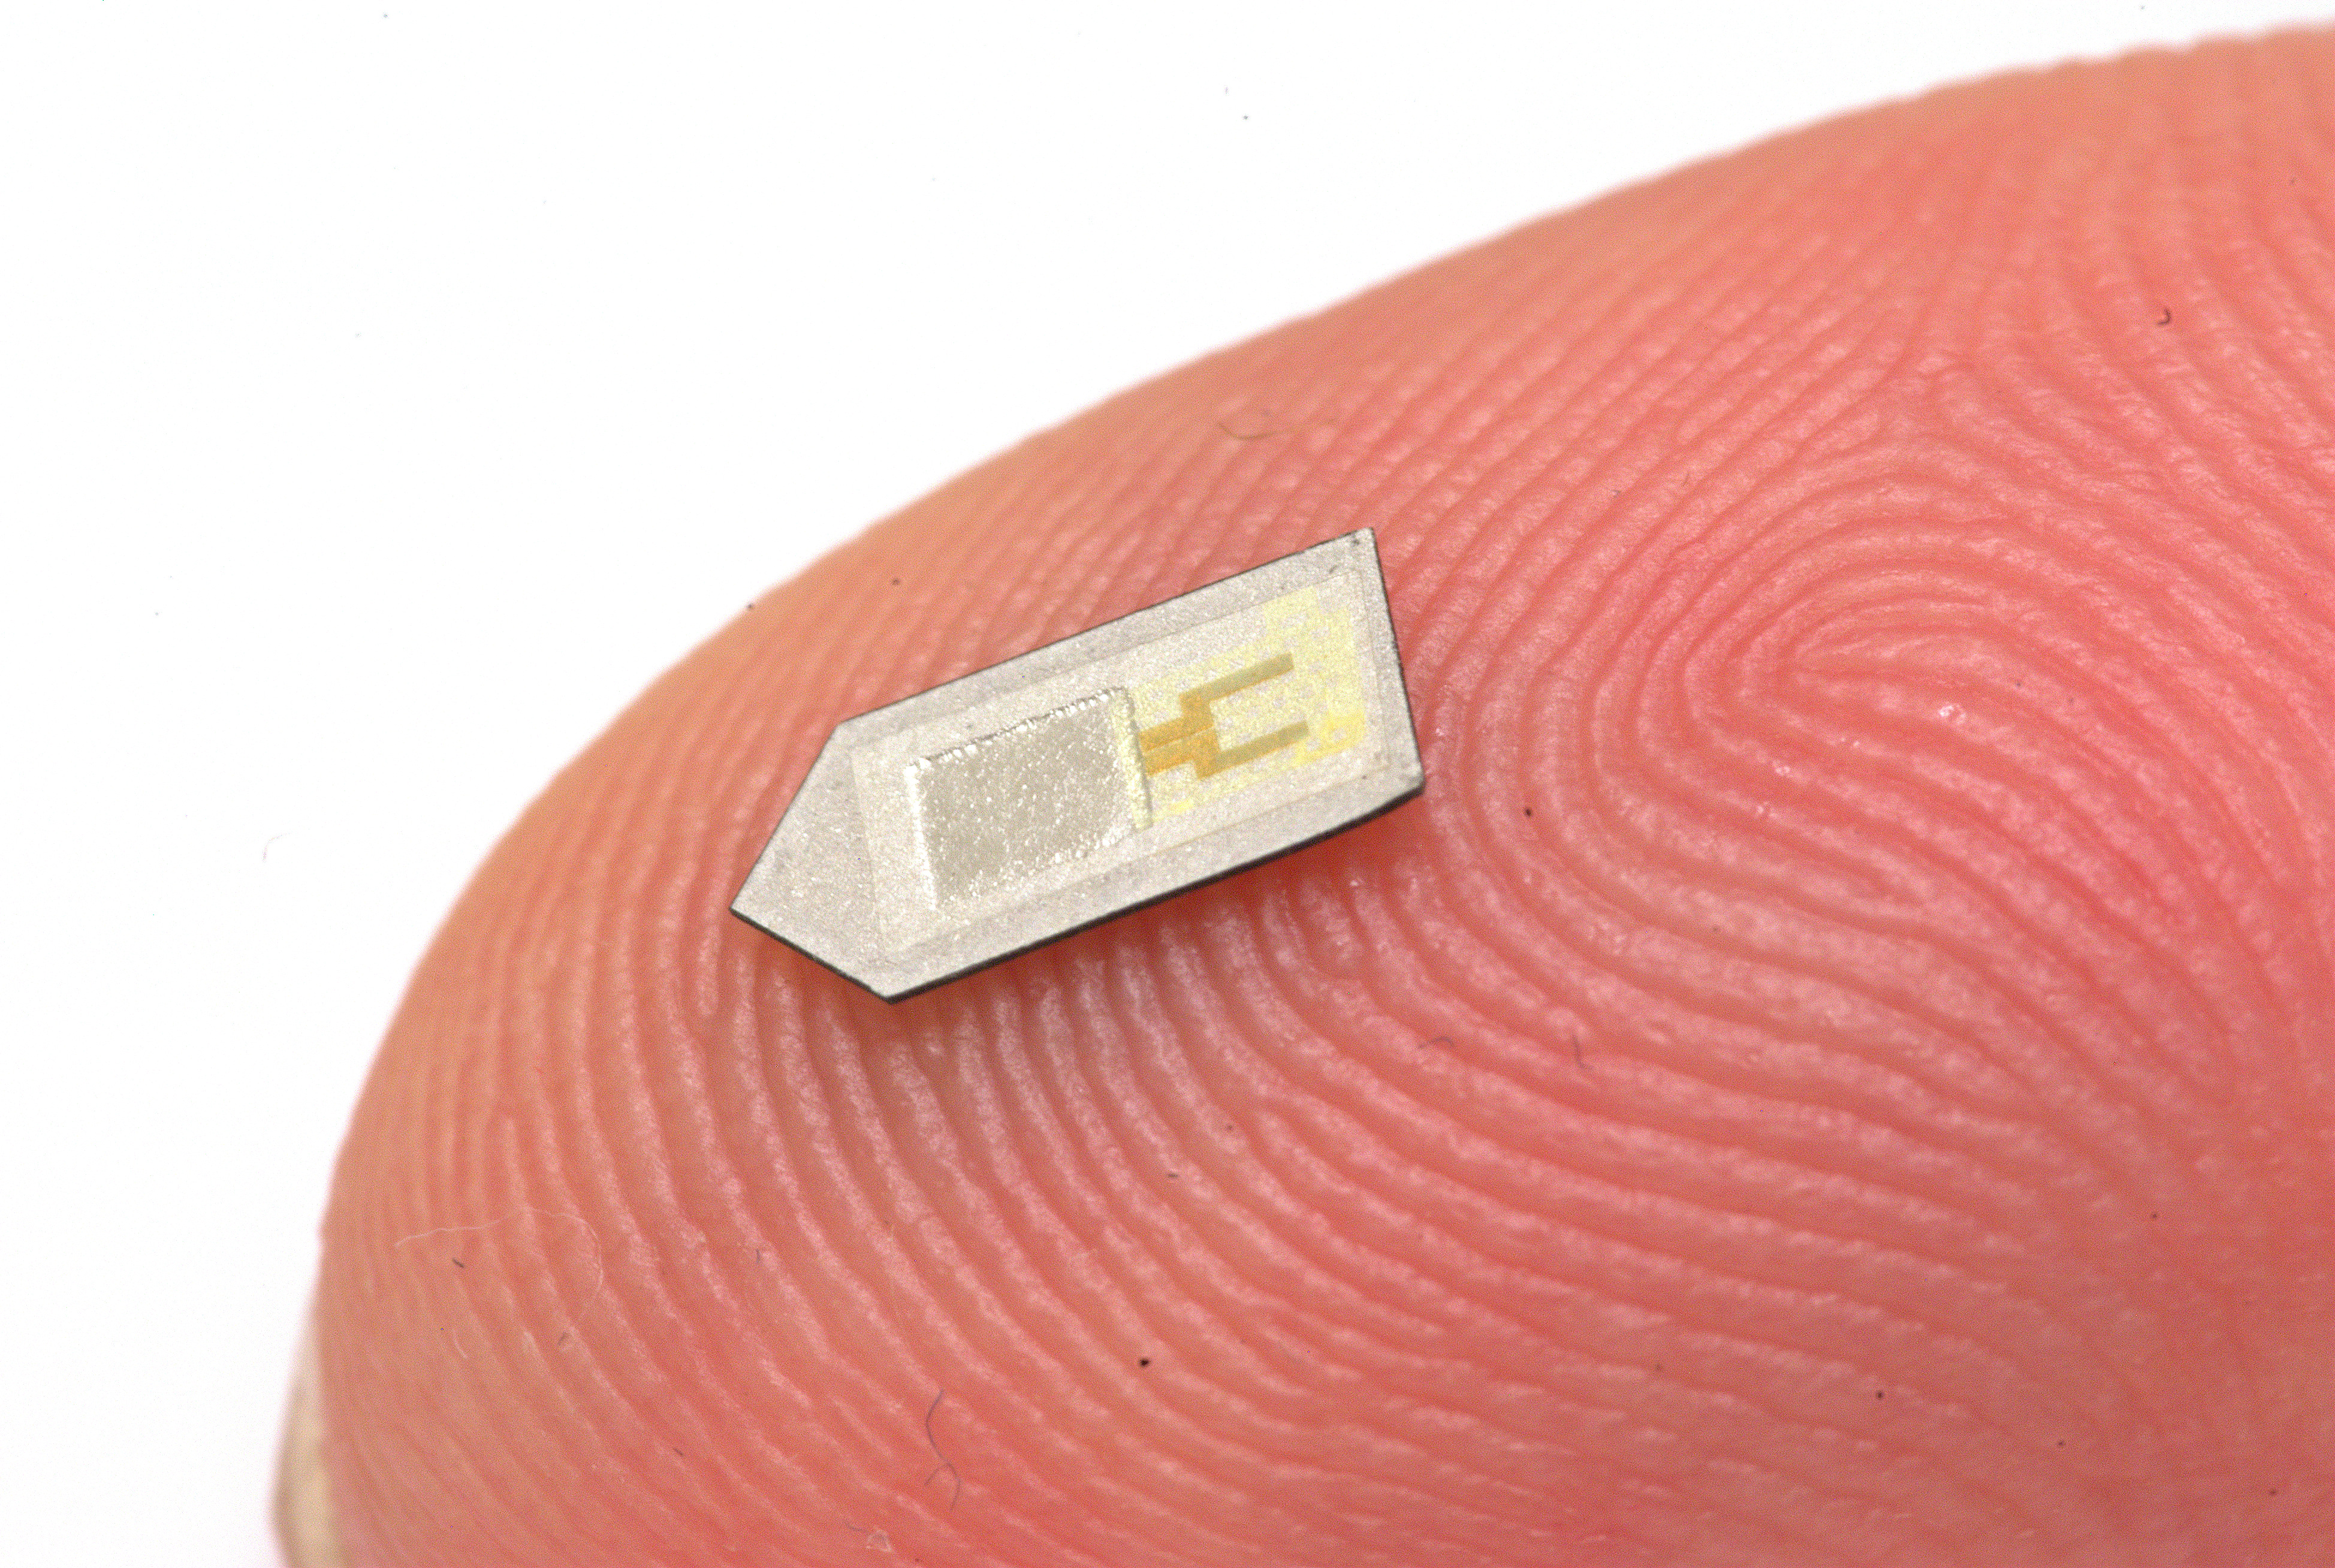 Tiny implanted sensors monitor brain injuries, then dissolve away - CBS News3896 x 2616